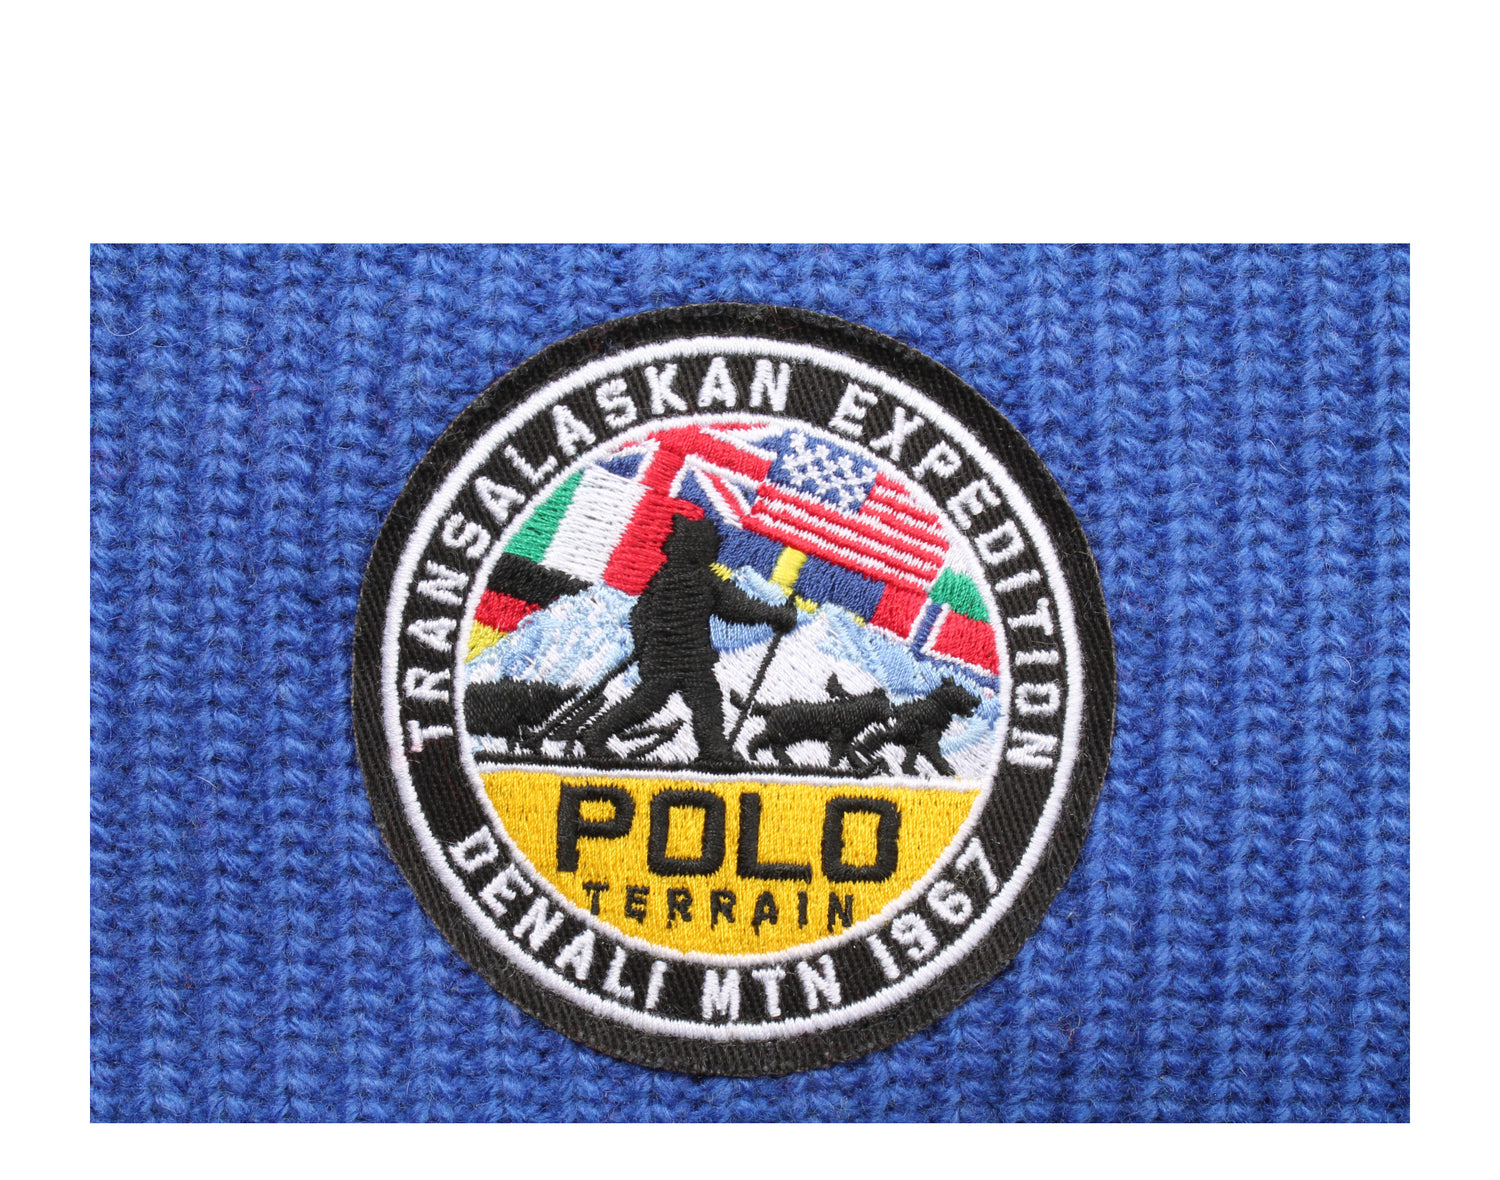 Polo Ralph Lauren Colorblocked Terrain Knit Cuffed Hat